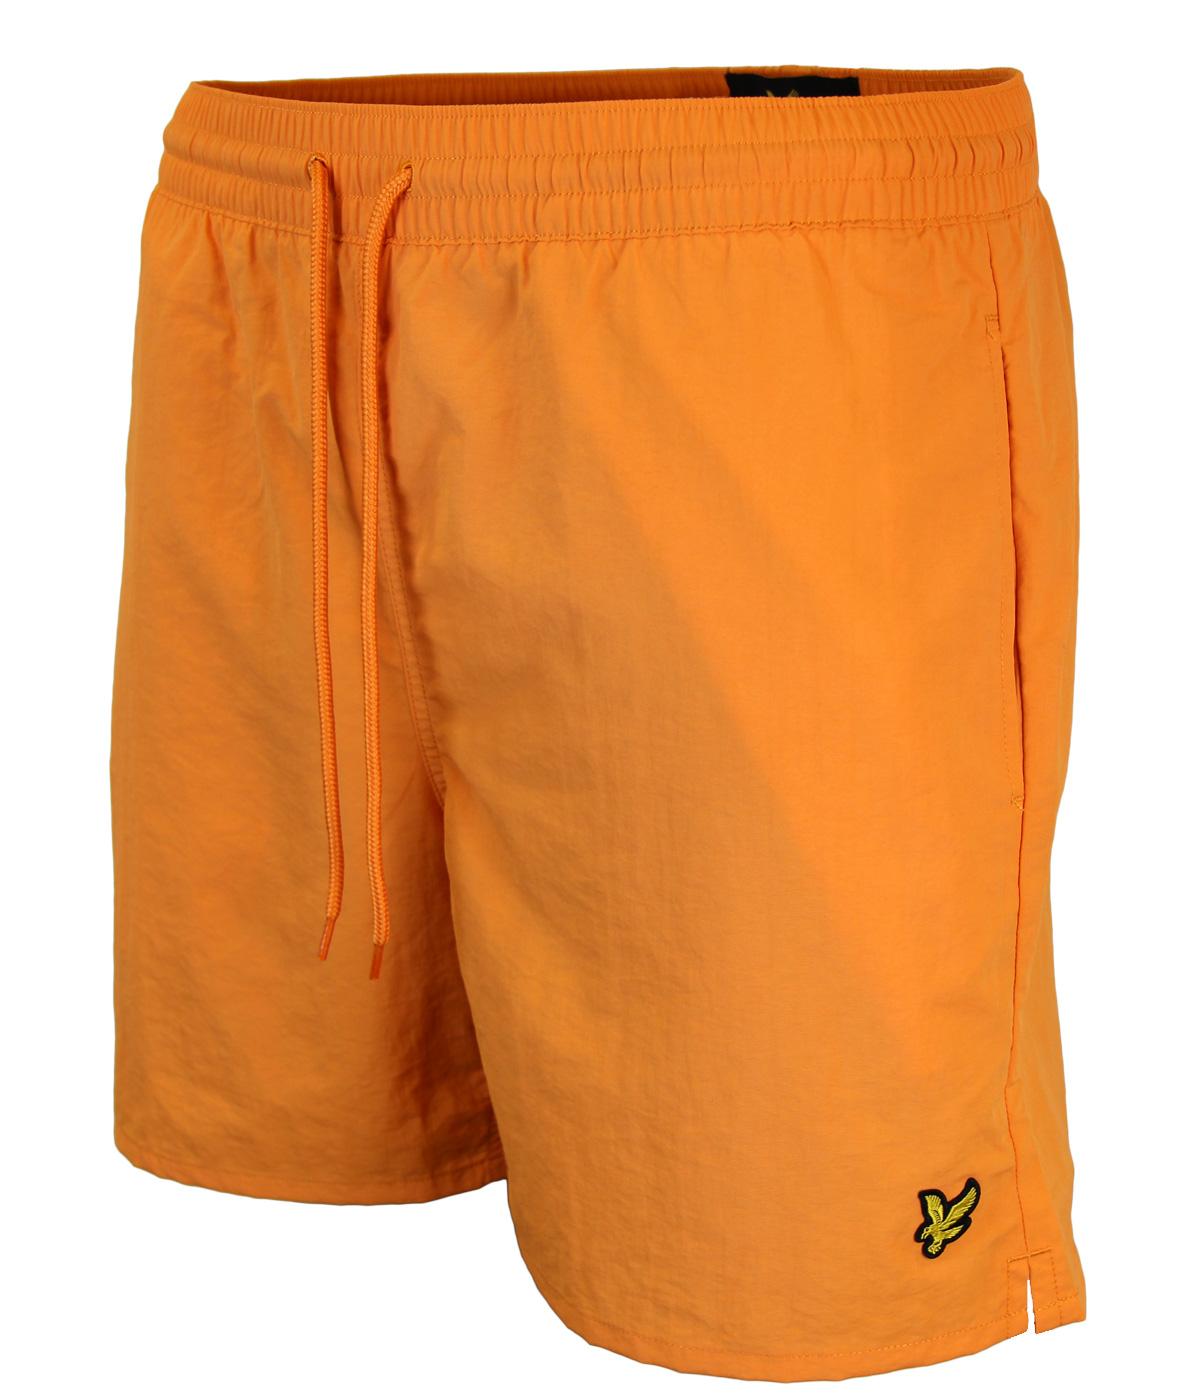 LYLE & SCOTT Retro Mod Plain Nylon Swim Shorts in Orange